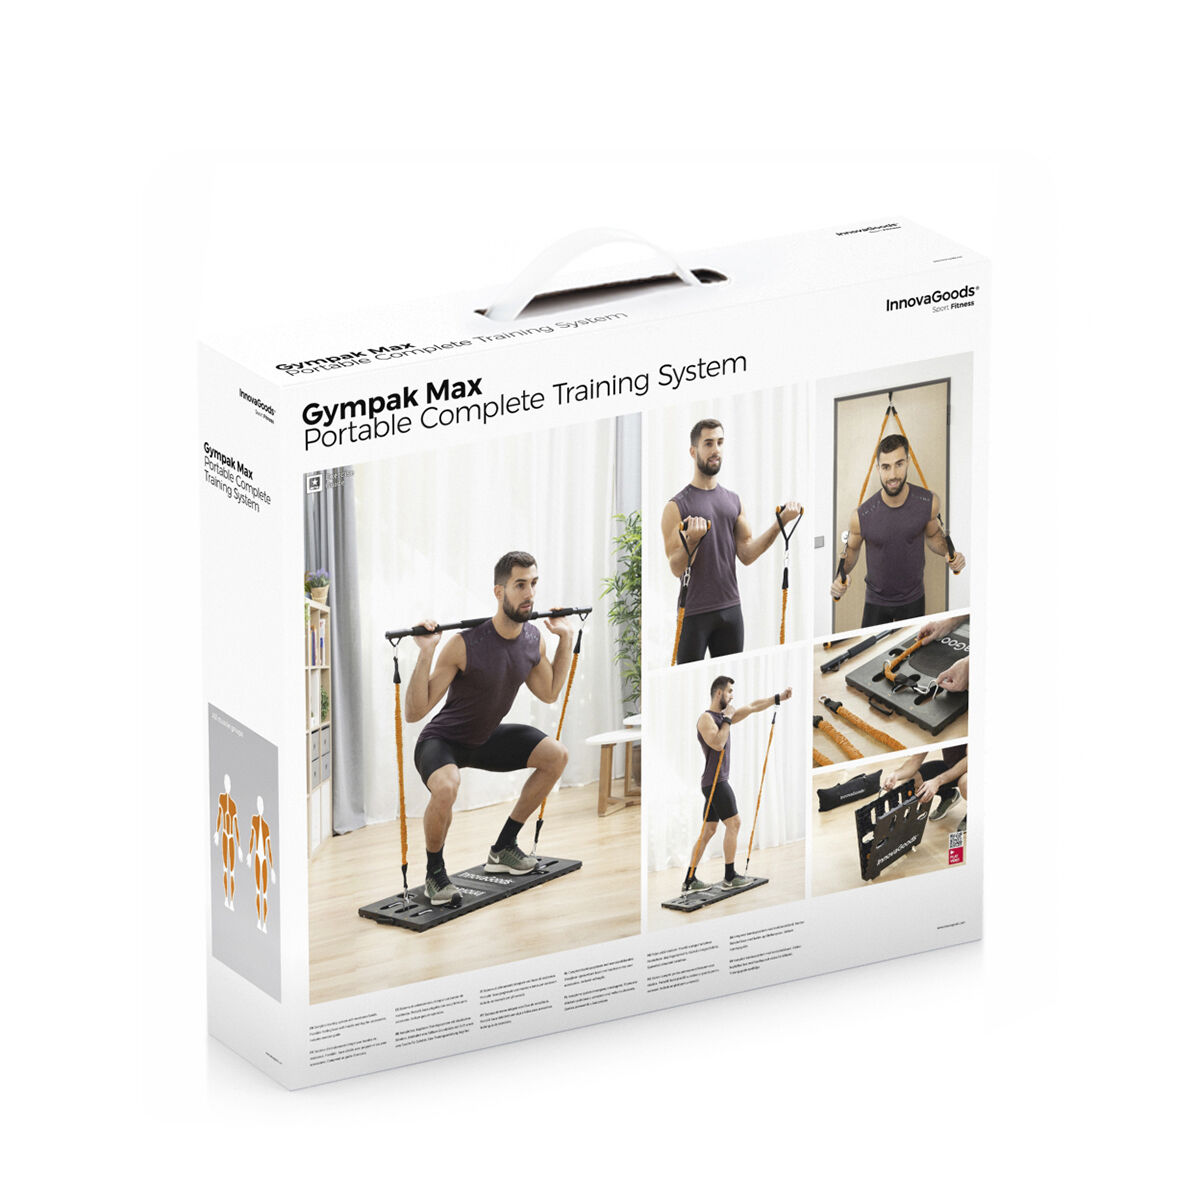 Integriertes tragbares Trainingssystem mit Übungsanleitung Gympak Max InnovaGoods